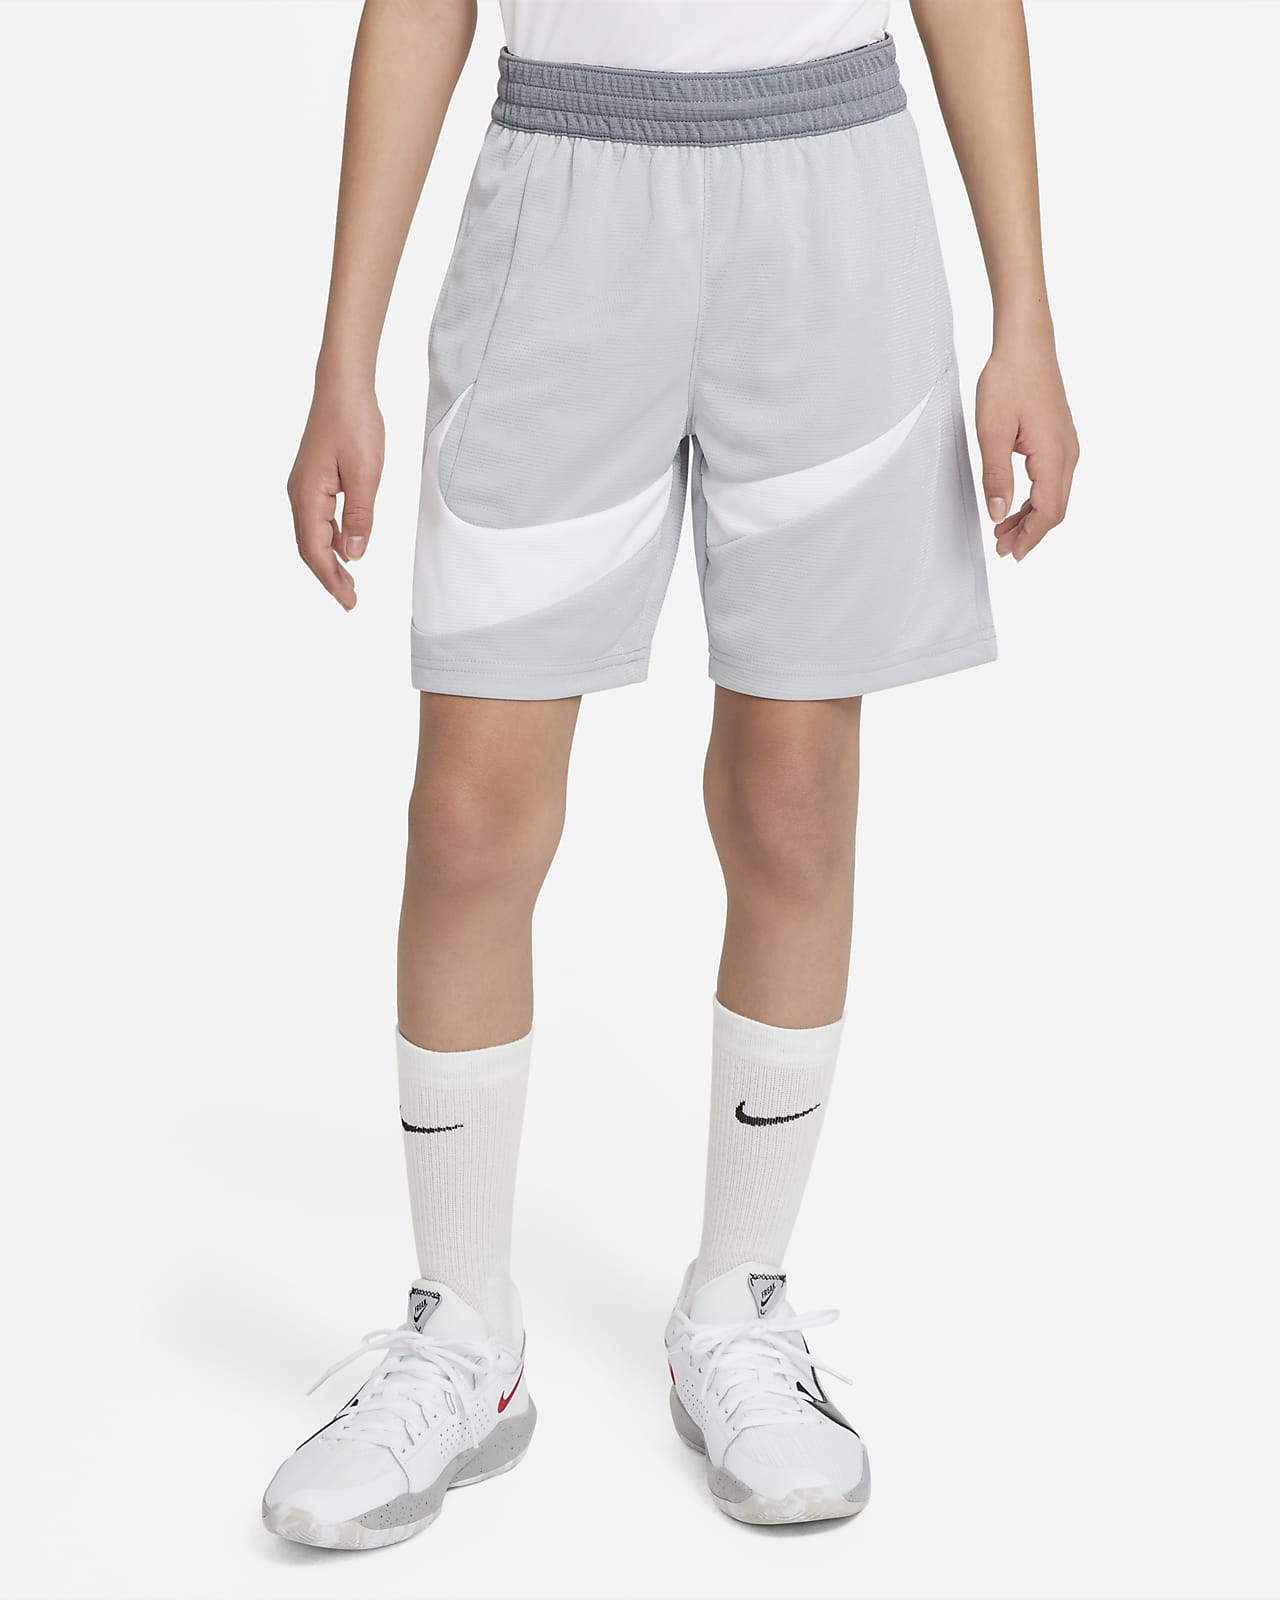 nike boys basketball shorts